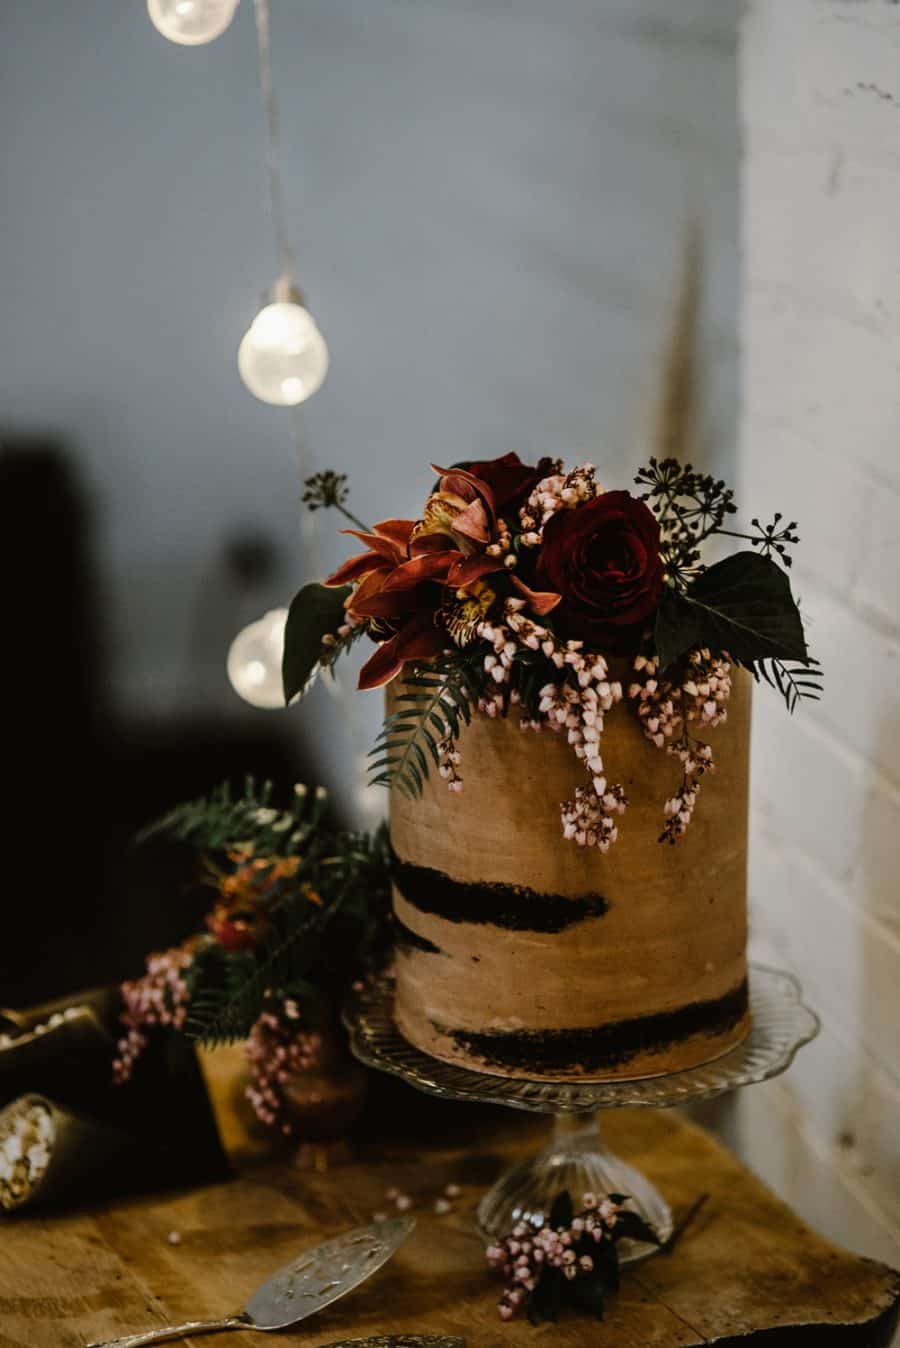 Best wedding cakes of 2016 - single tiered chocolate wedding cake